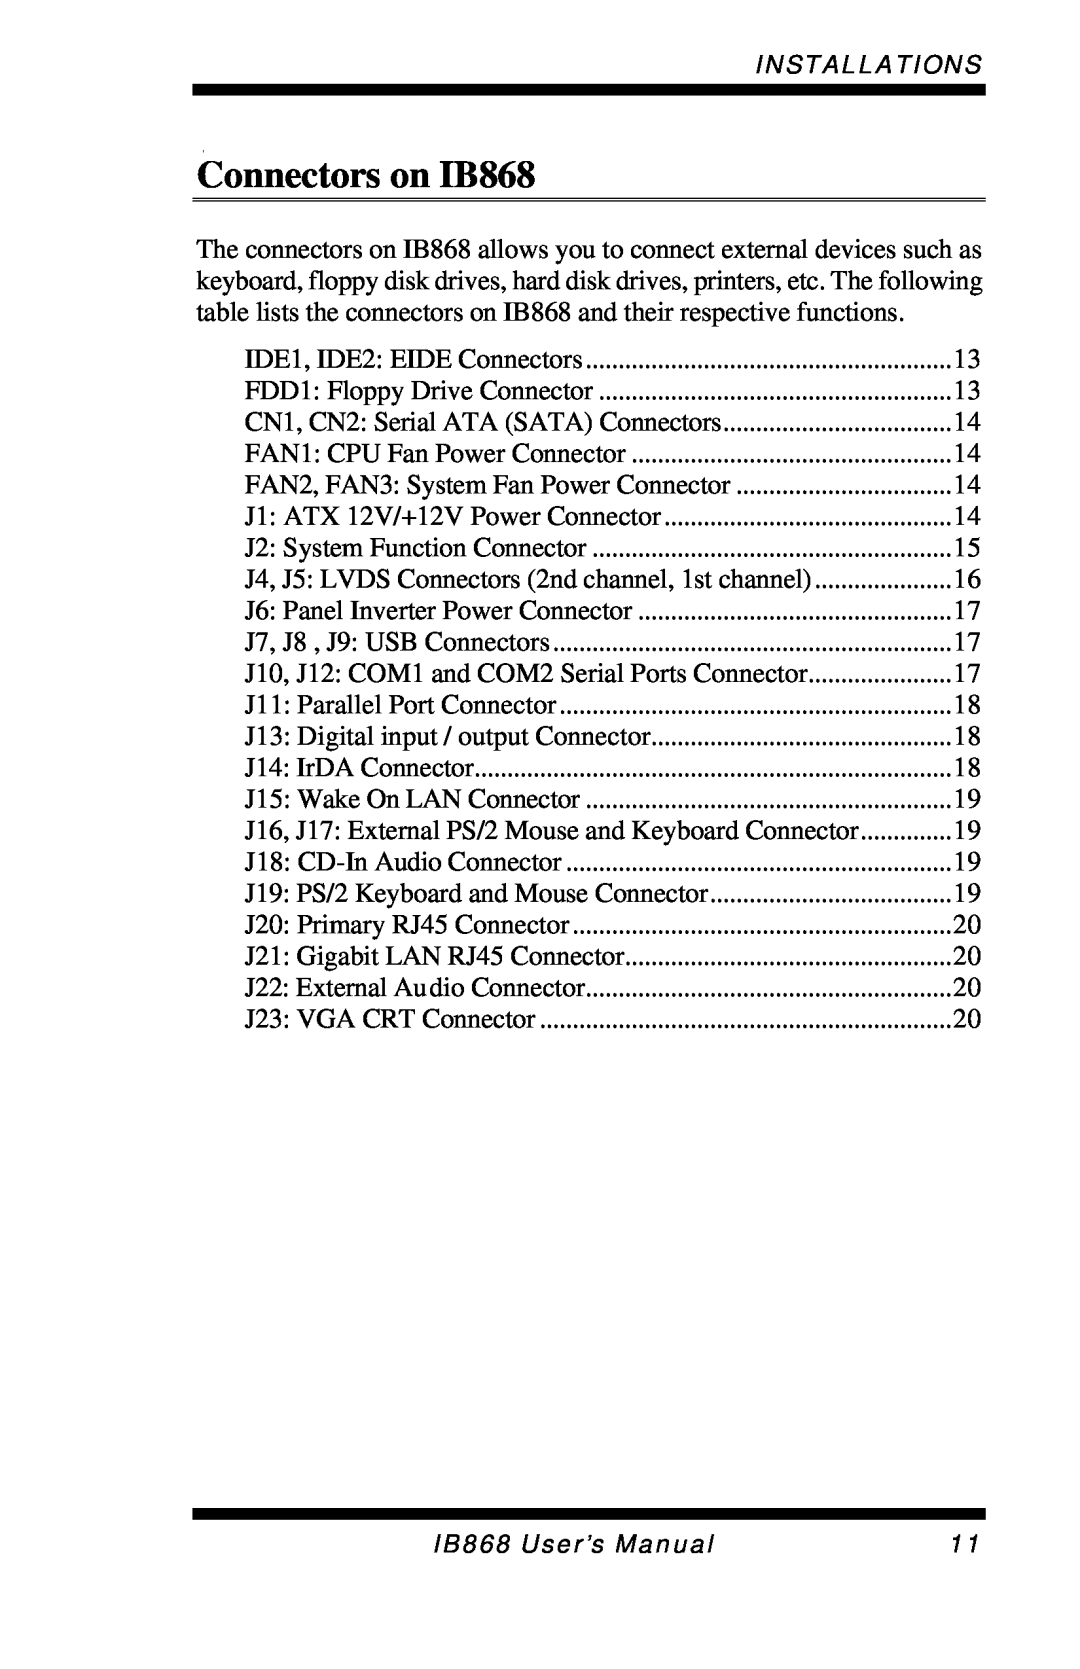 Intel user manual Connectors on IB868 